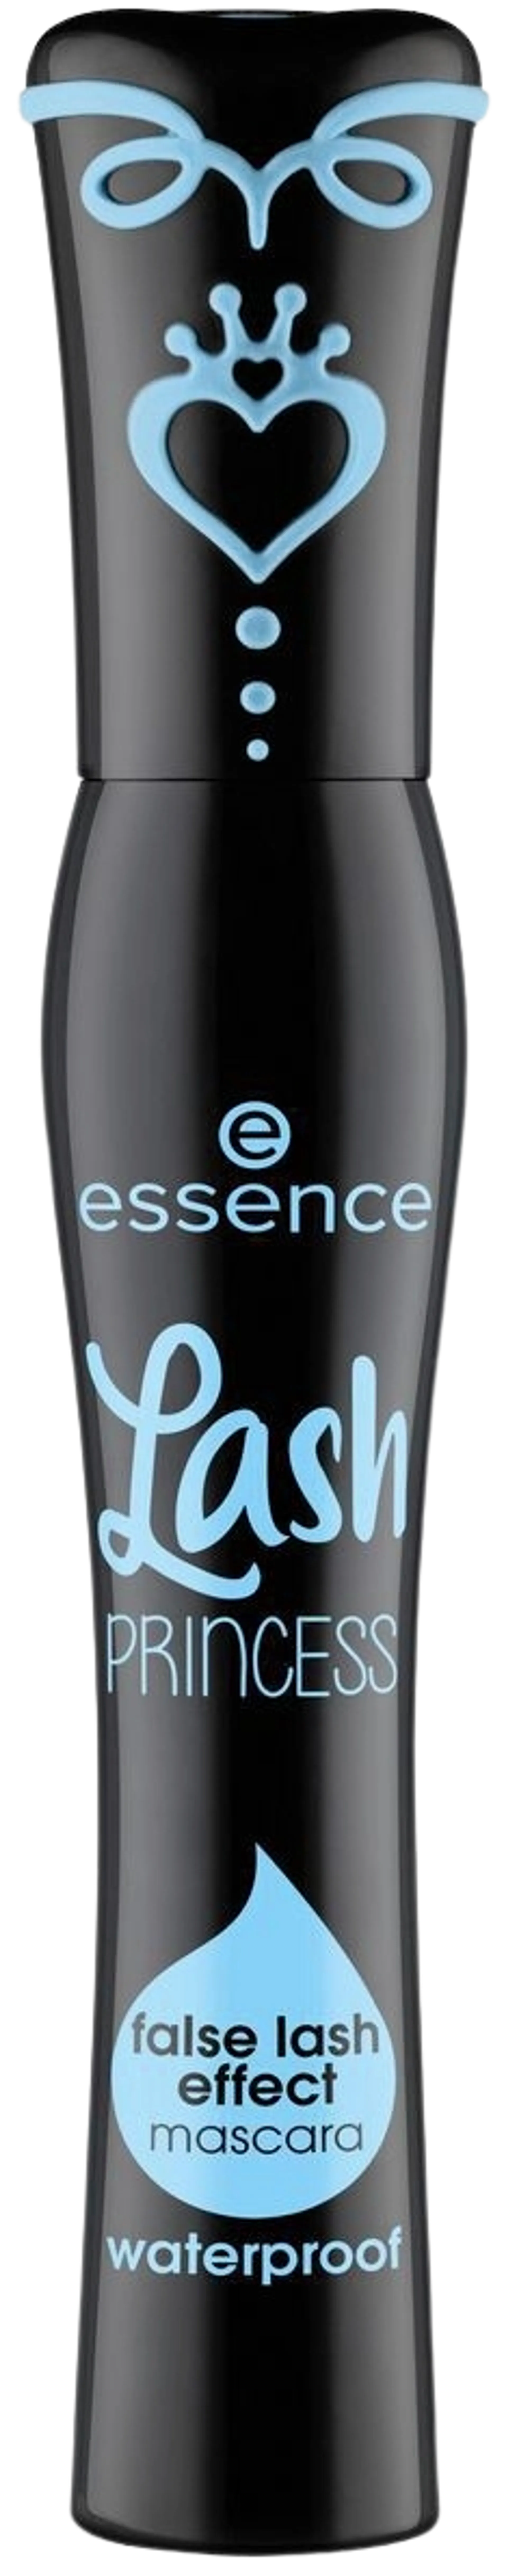 essence Lash PRINCESS false lash effect mascara waterproof vedenkestävä ripsiväri 12 ml - 2